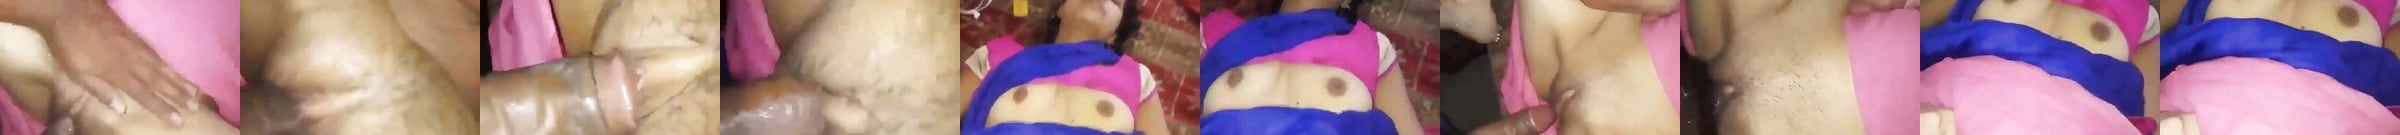 Featured Mami Ko Choda Porn Videos Xhamster